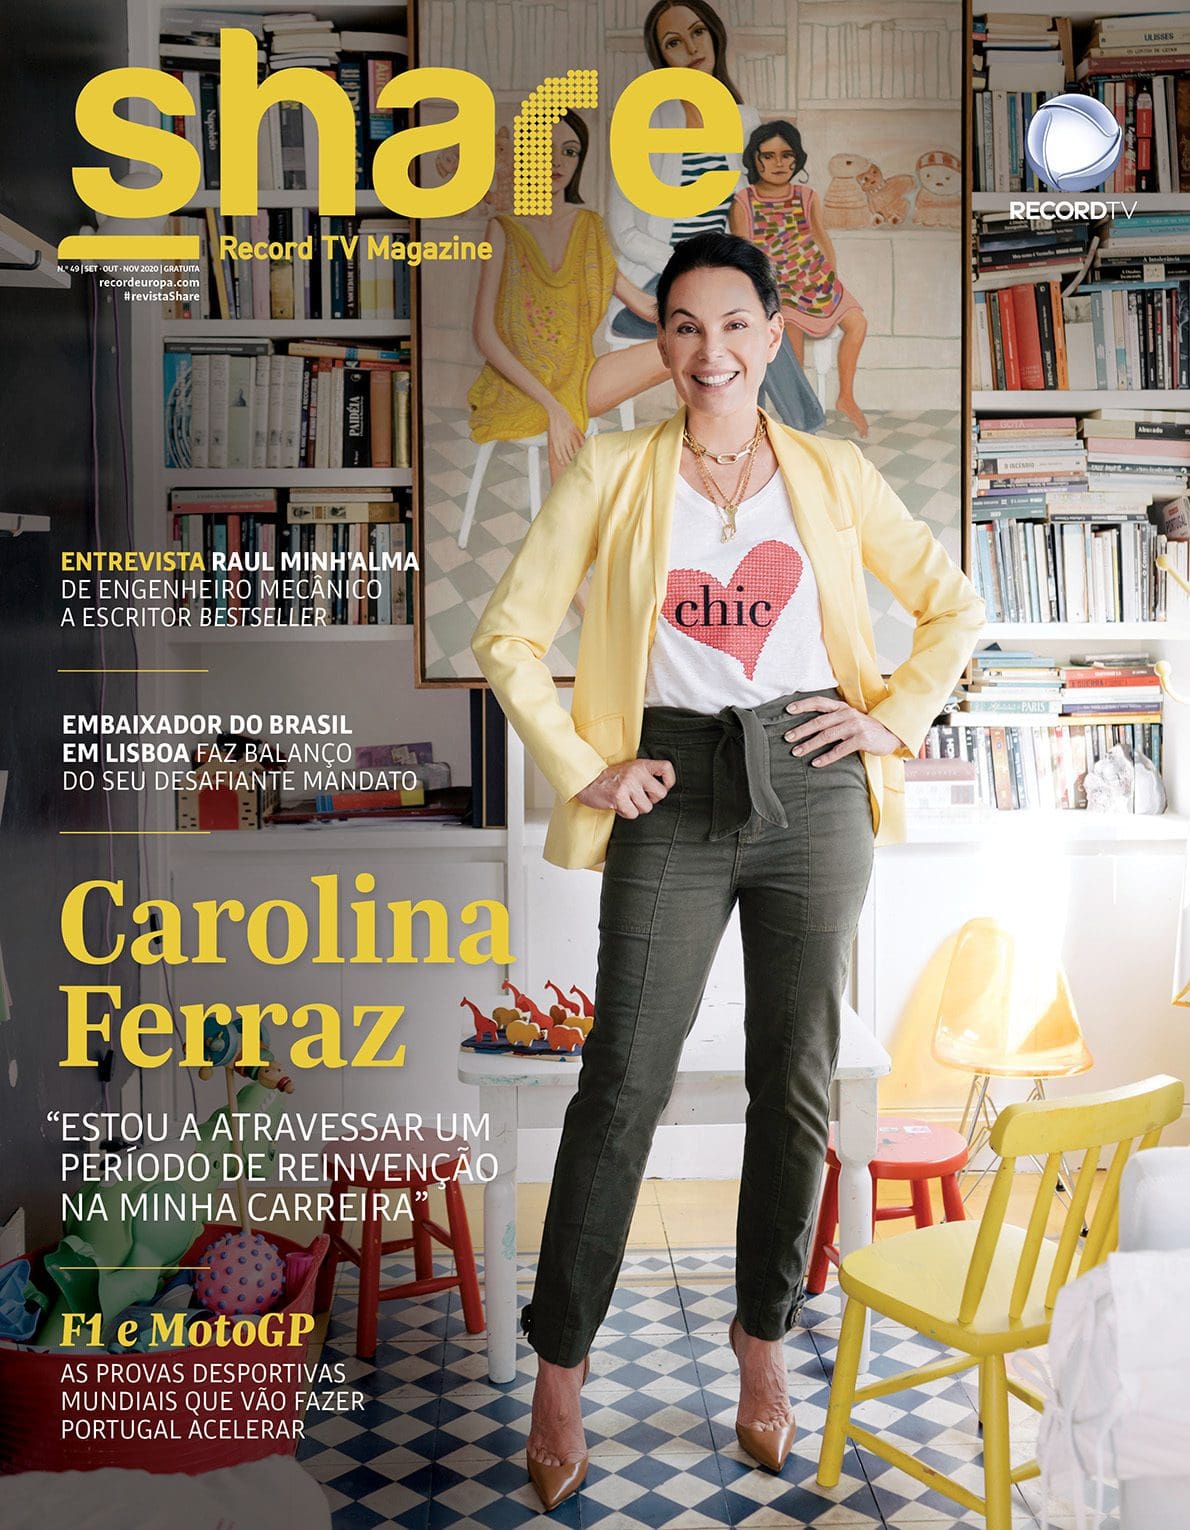 Share Magazine 49 - Carolina Ferraz